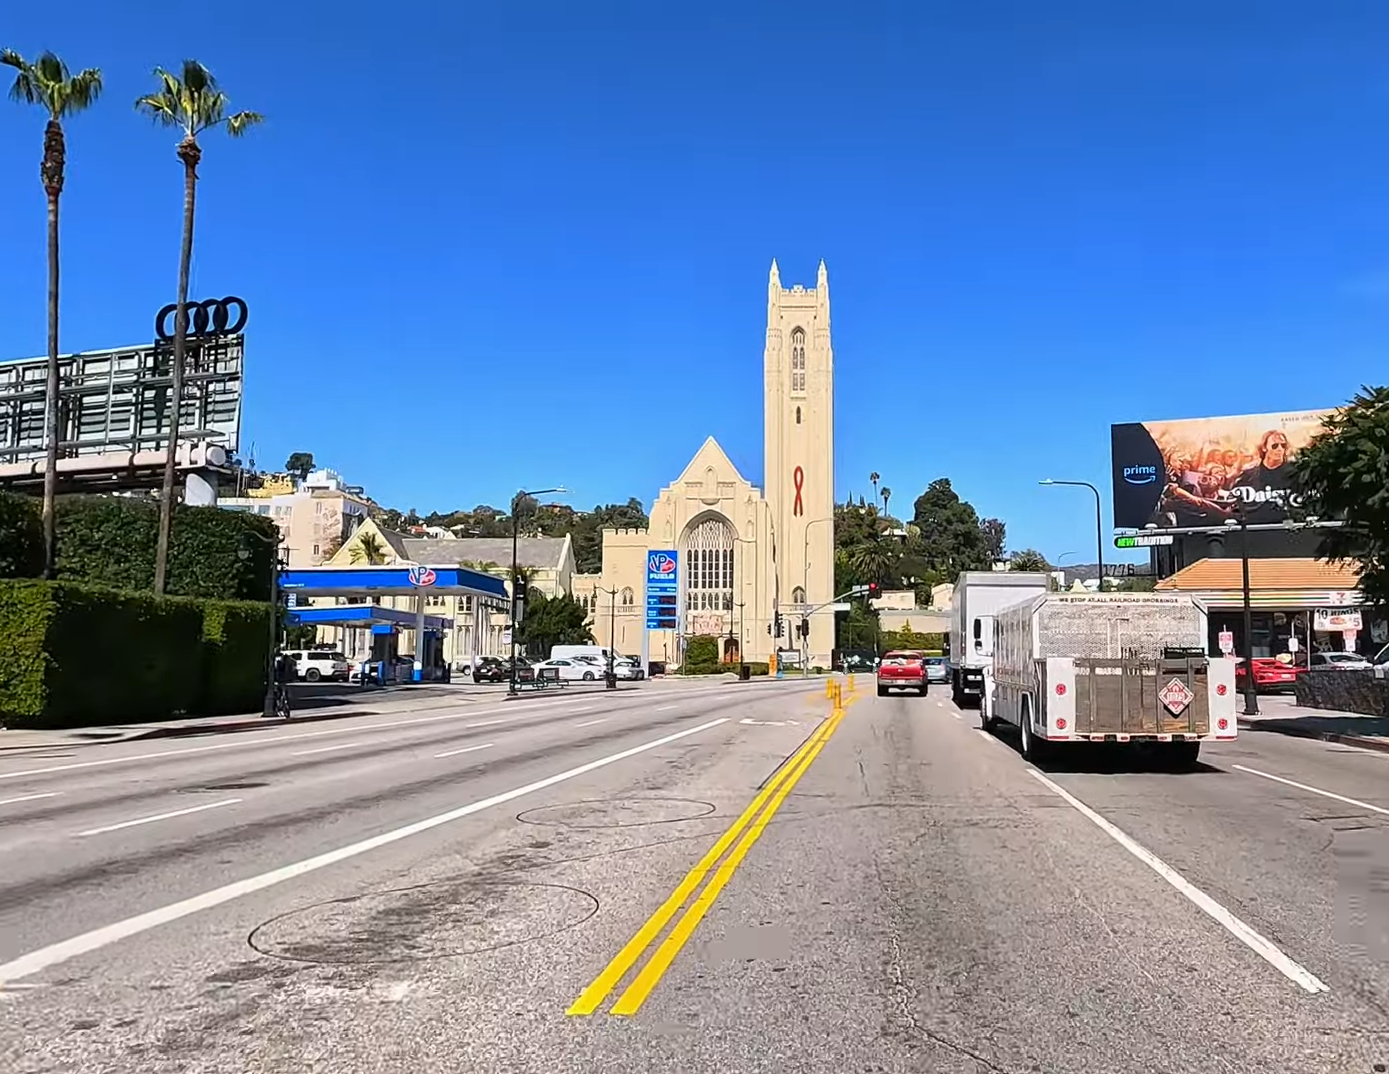 A drive though Hollywood LA